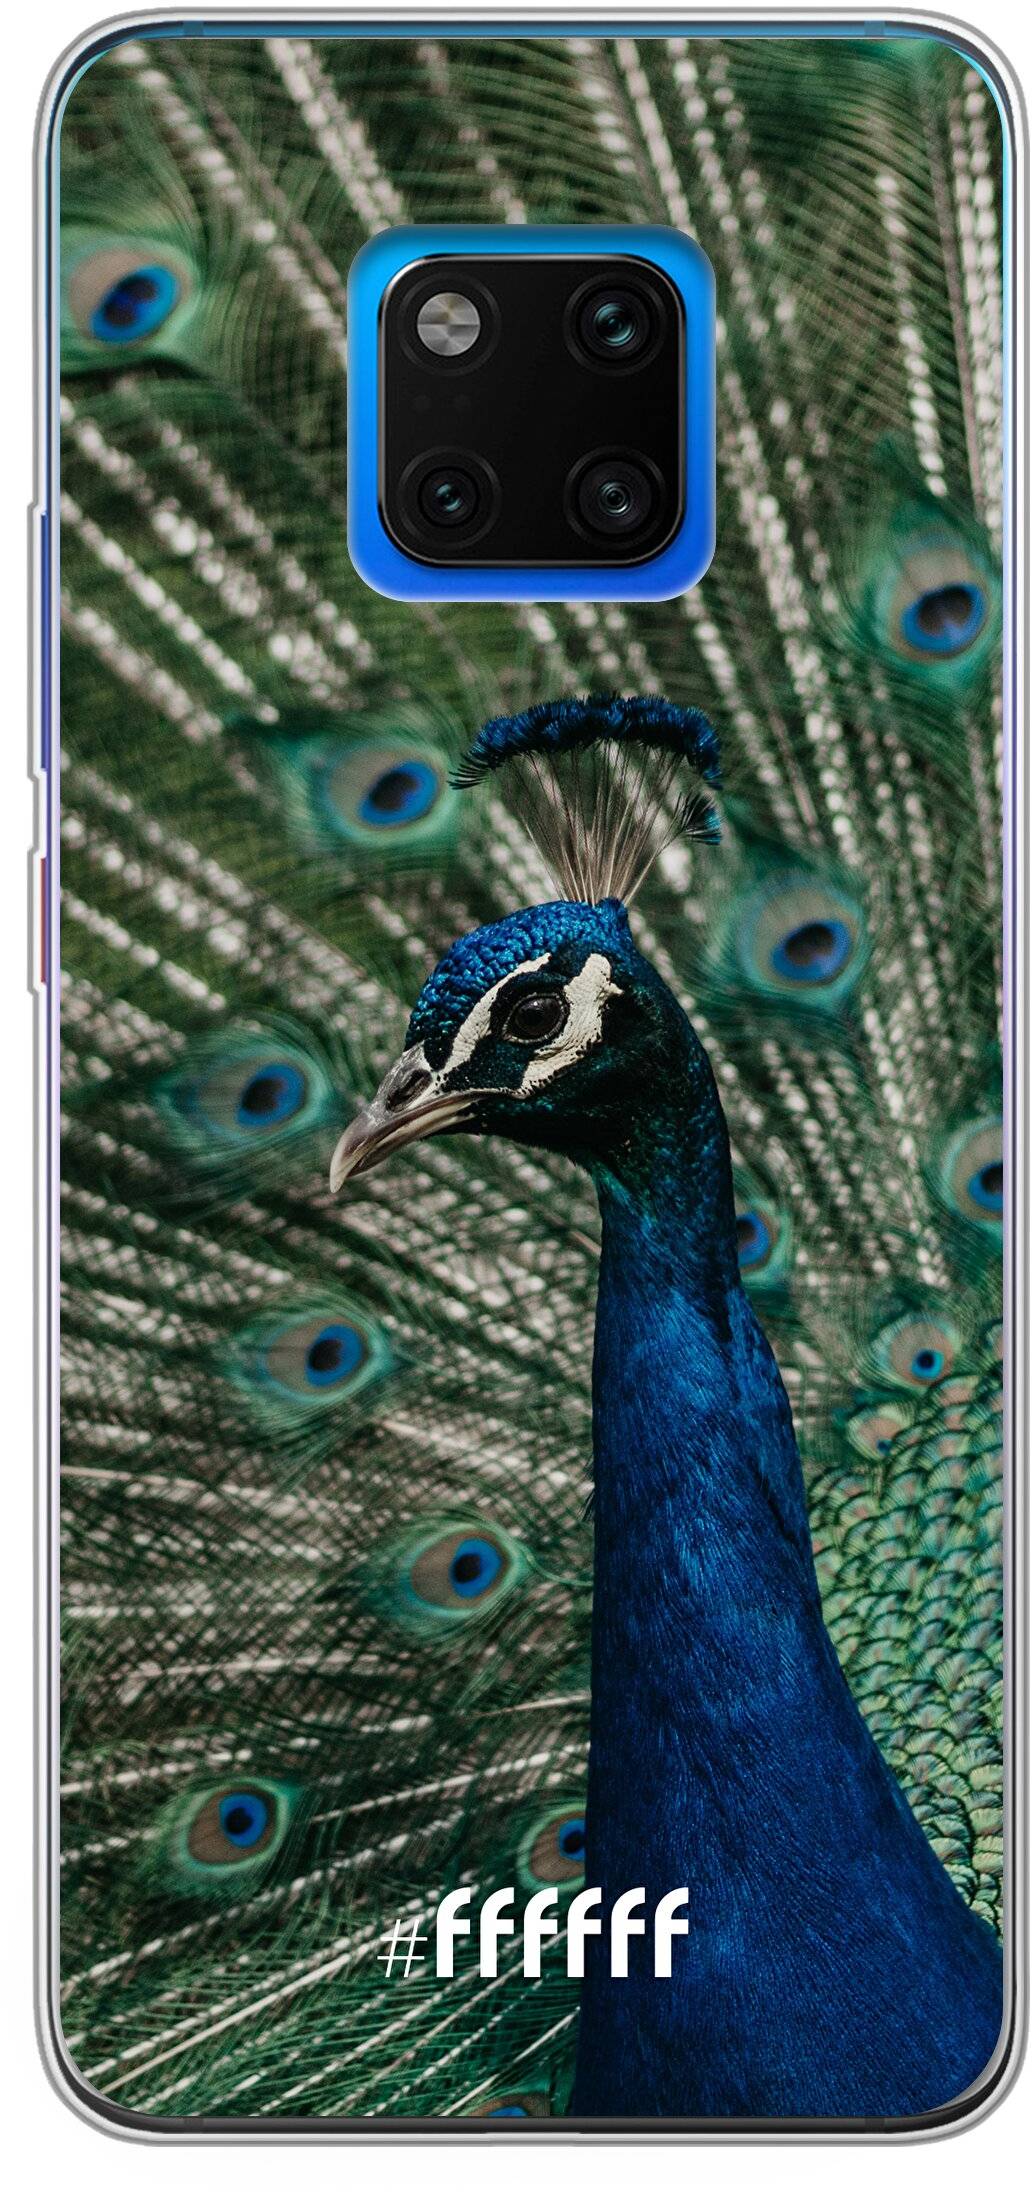 Peacock Mate 20 Pro